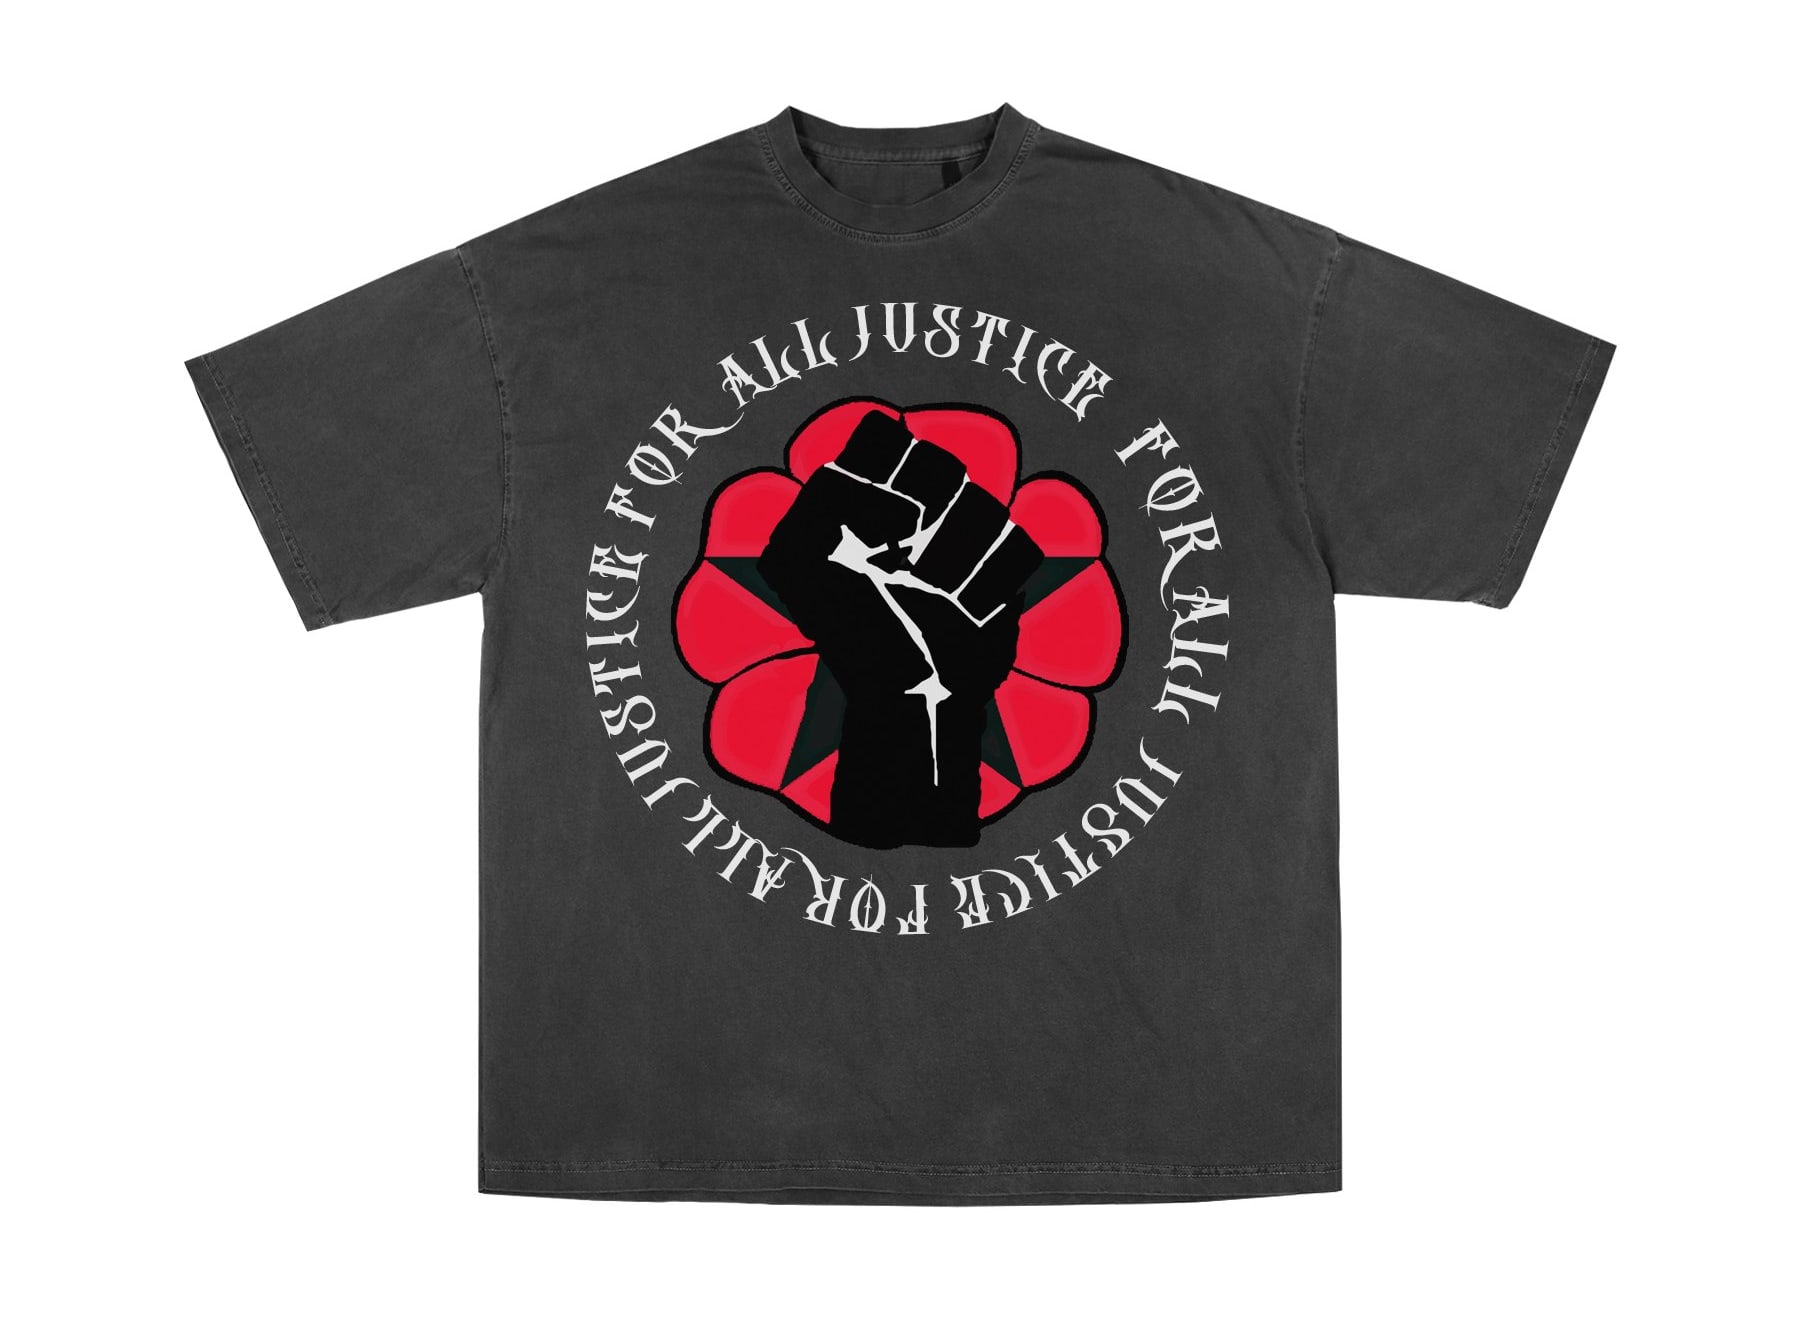 BLACK LIVES MATTER Printed T-shirt Blm Mens Adults Unisex Gifts Present Slogan Tee T Tshirt Tops